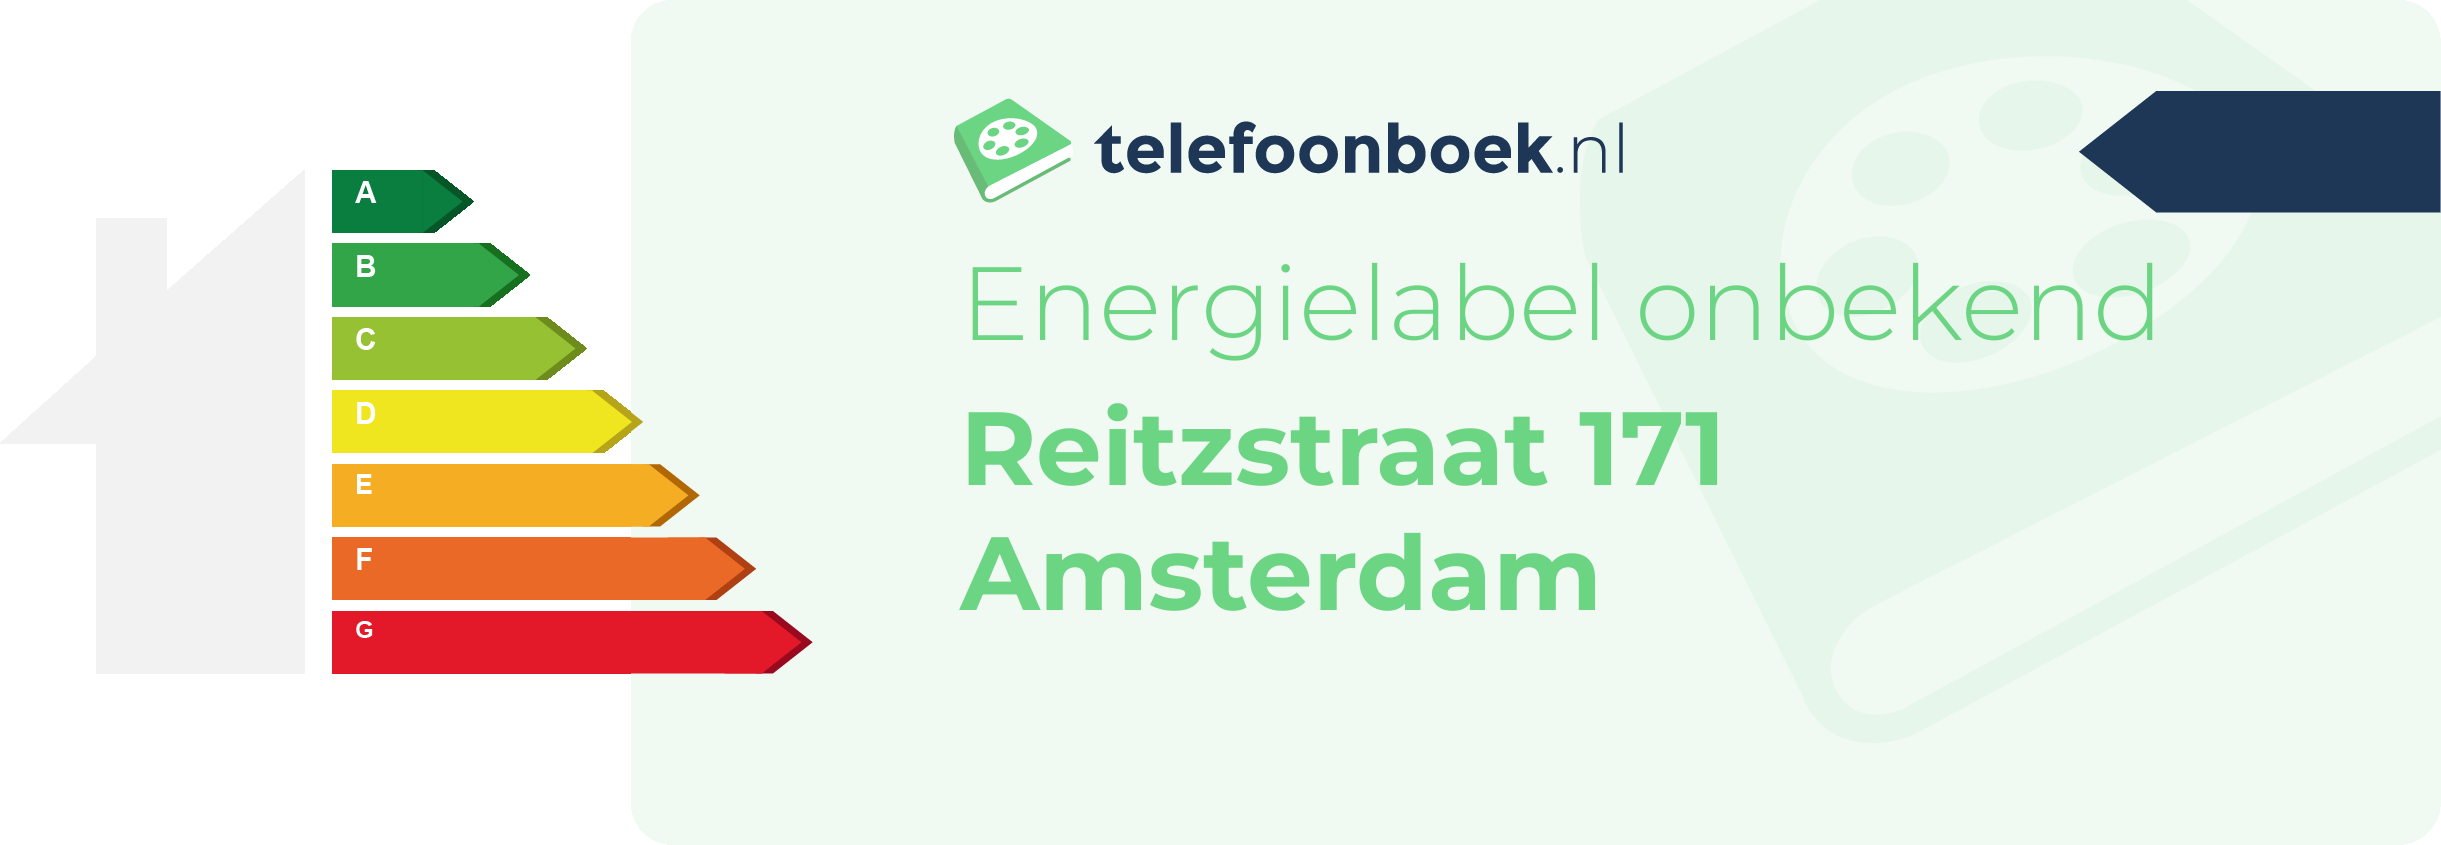 Energielabel Reitzstraat 171 Amsterdam